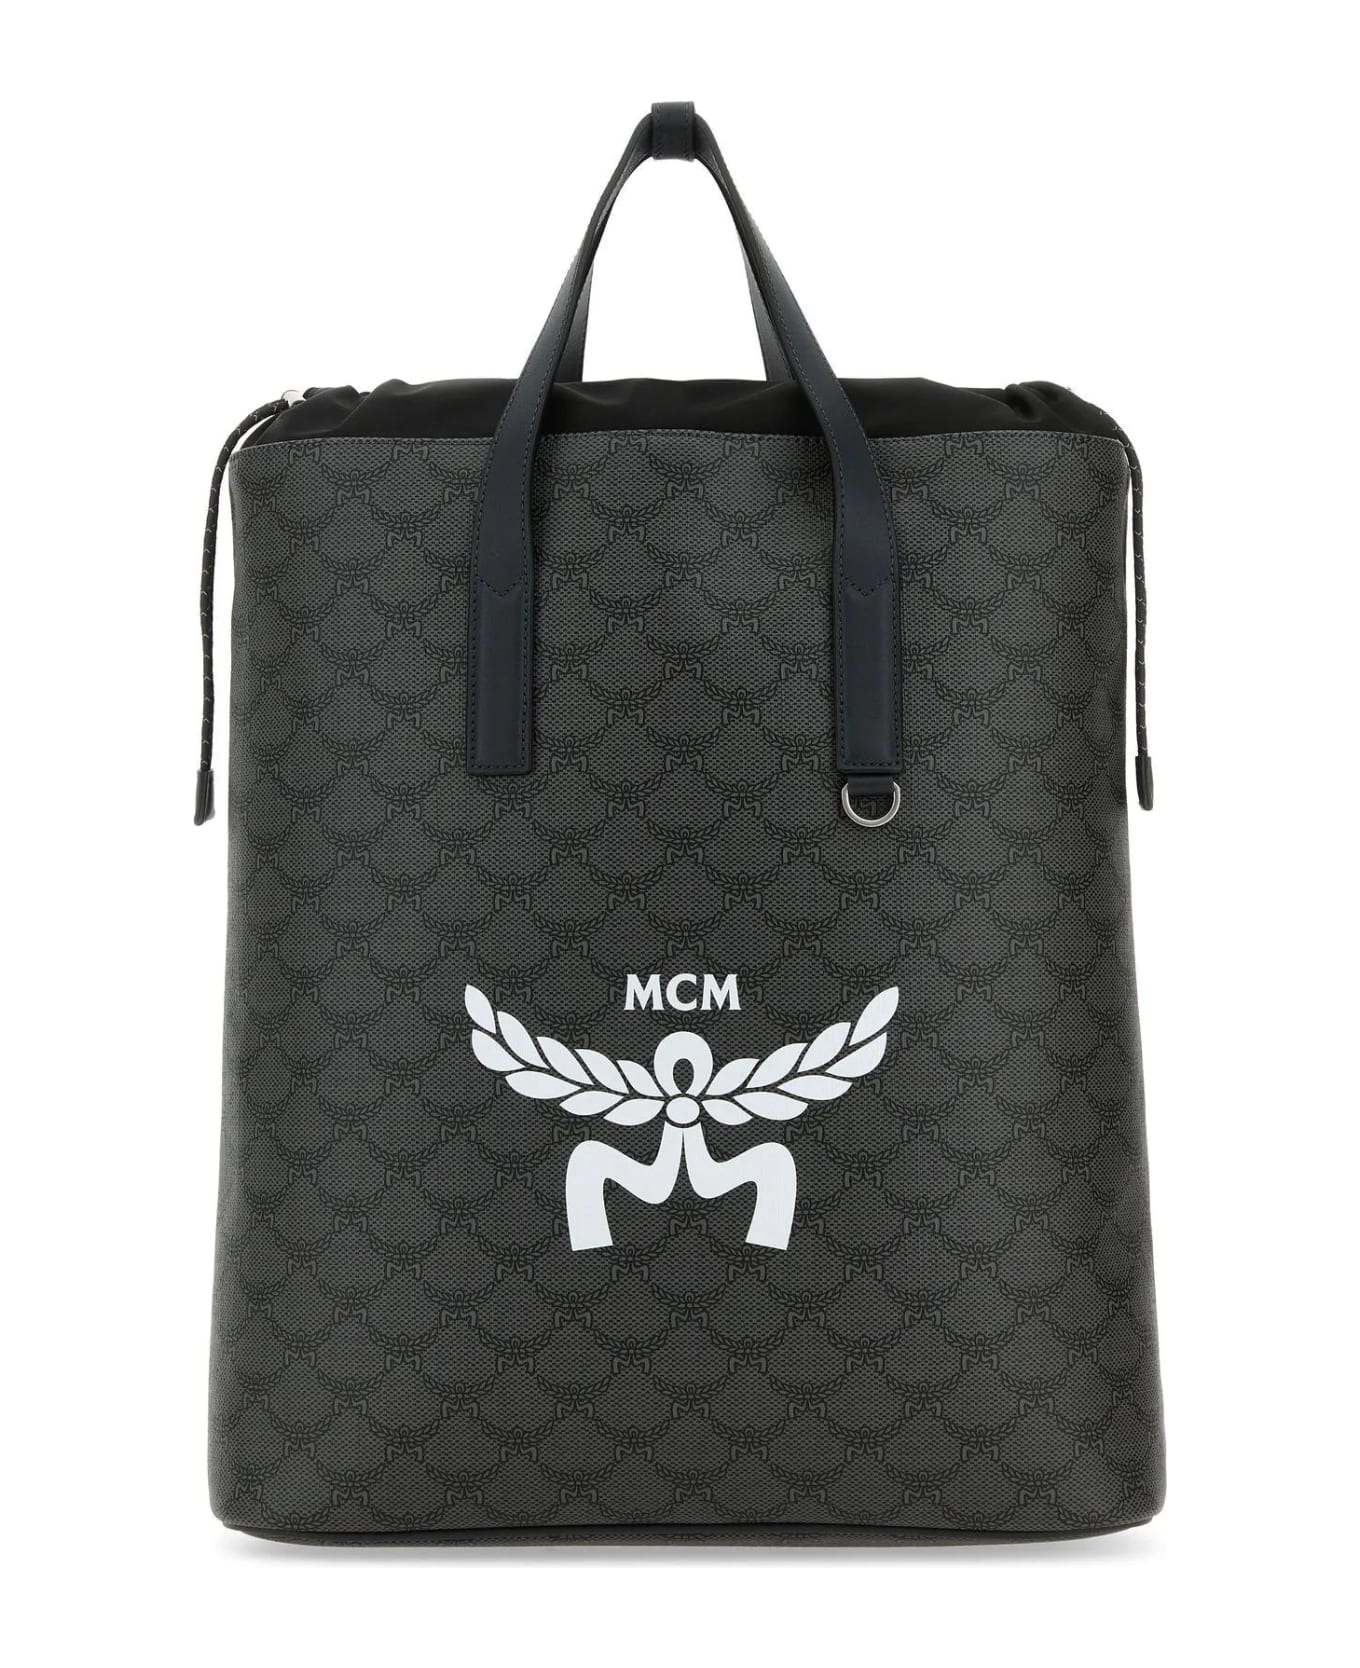 MCM Printed Canvas Himmel Backpack - BLACK/GREY